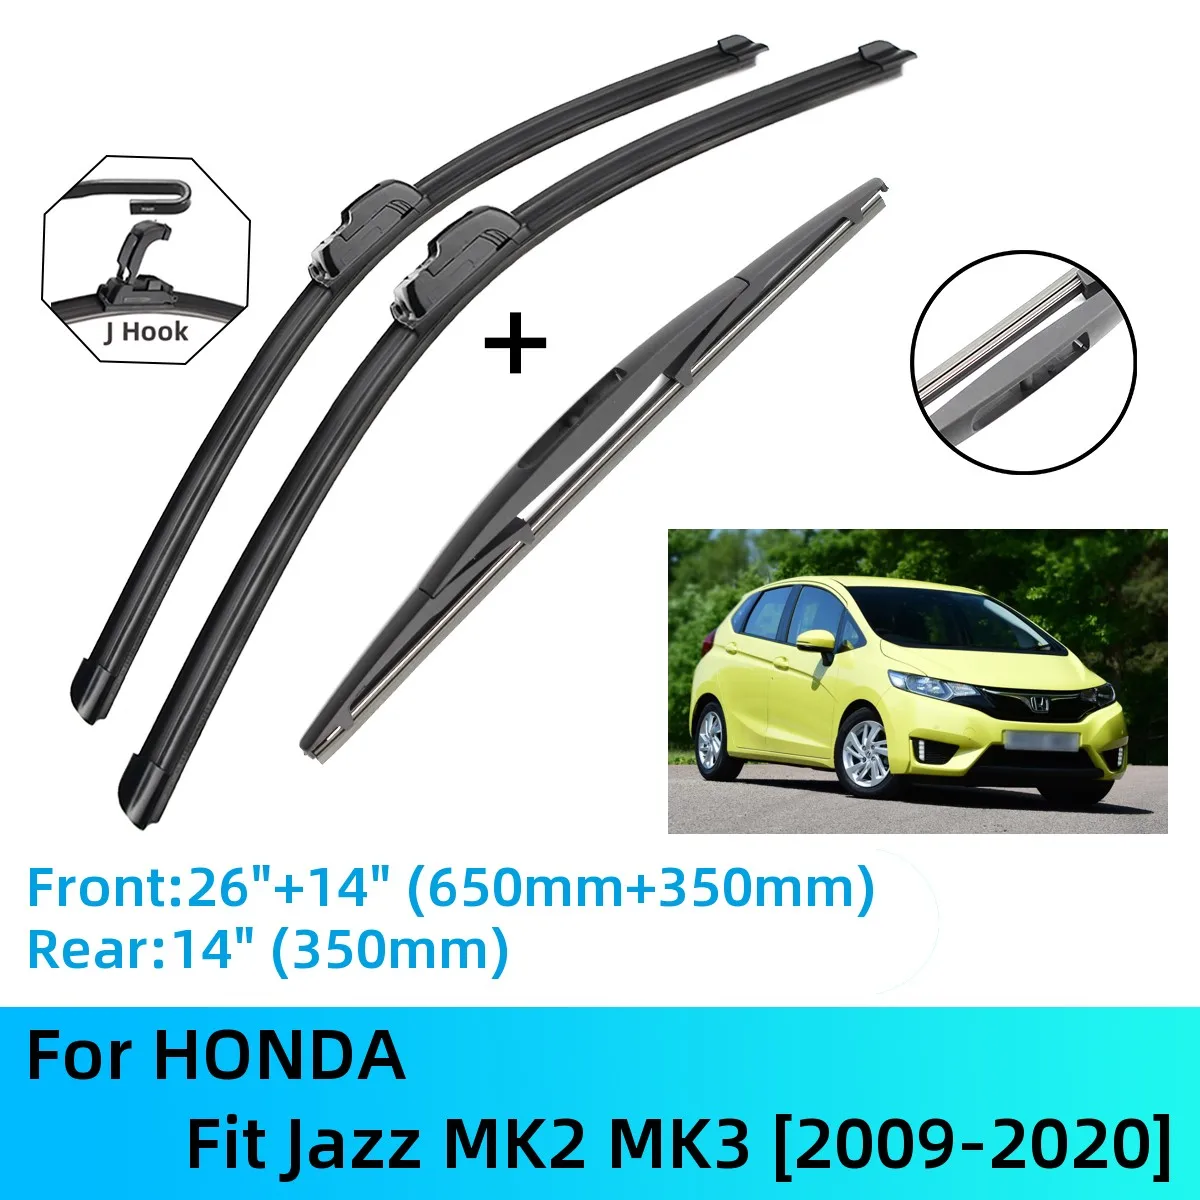 For Honda Fit Jazz Mk2 Mk3 Front Rear Wiper Blades Brushes Accessories J Hook 2009-2020 2016 2017 2018 2019 2020 - Windscreen Wipers - AliExpress